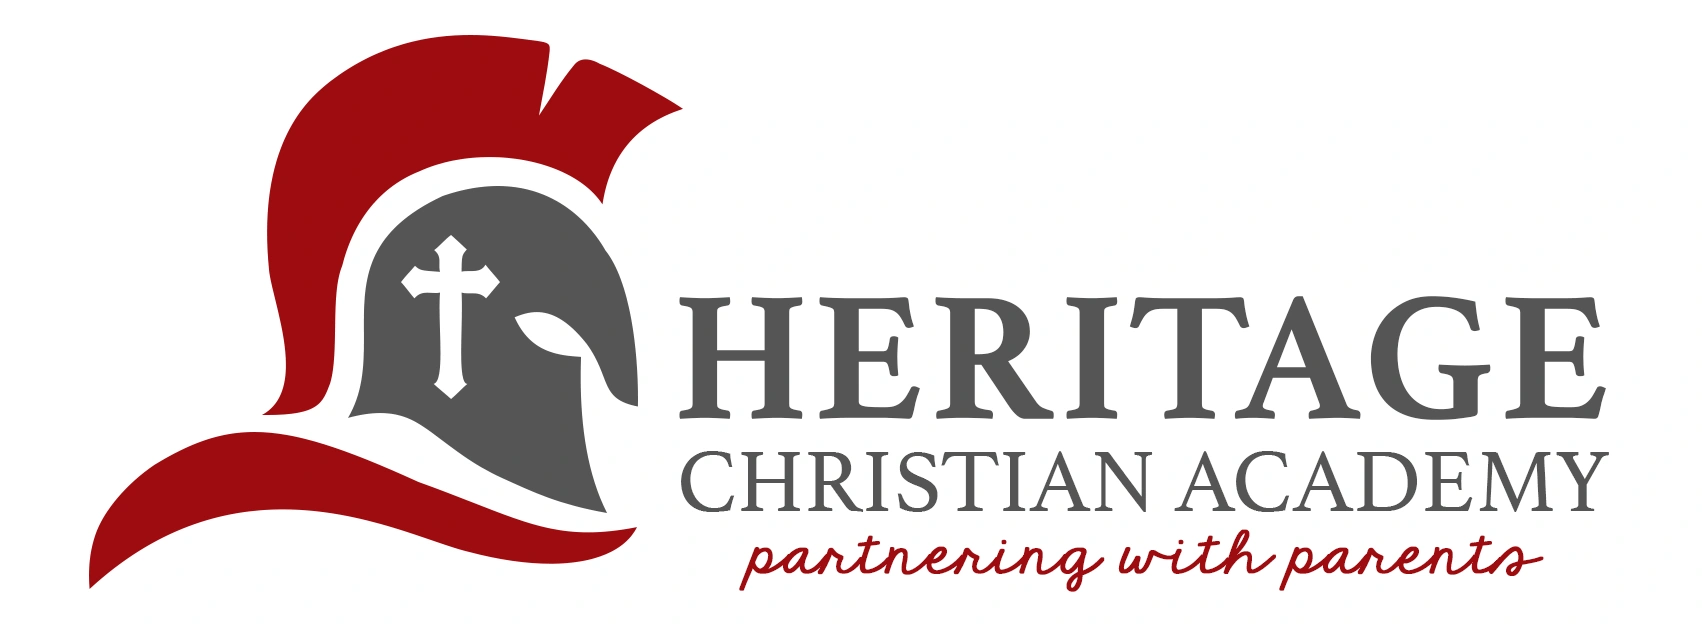 Heritage Christian Academy HCA Granbury Texas Homeschool co-op coop private school education teach